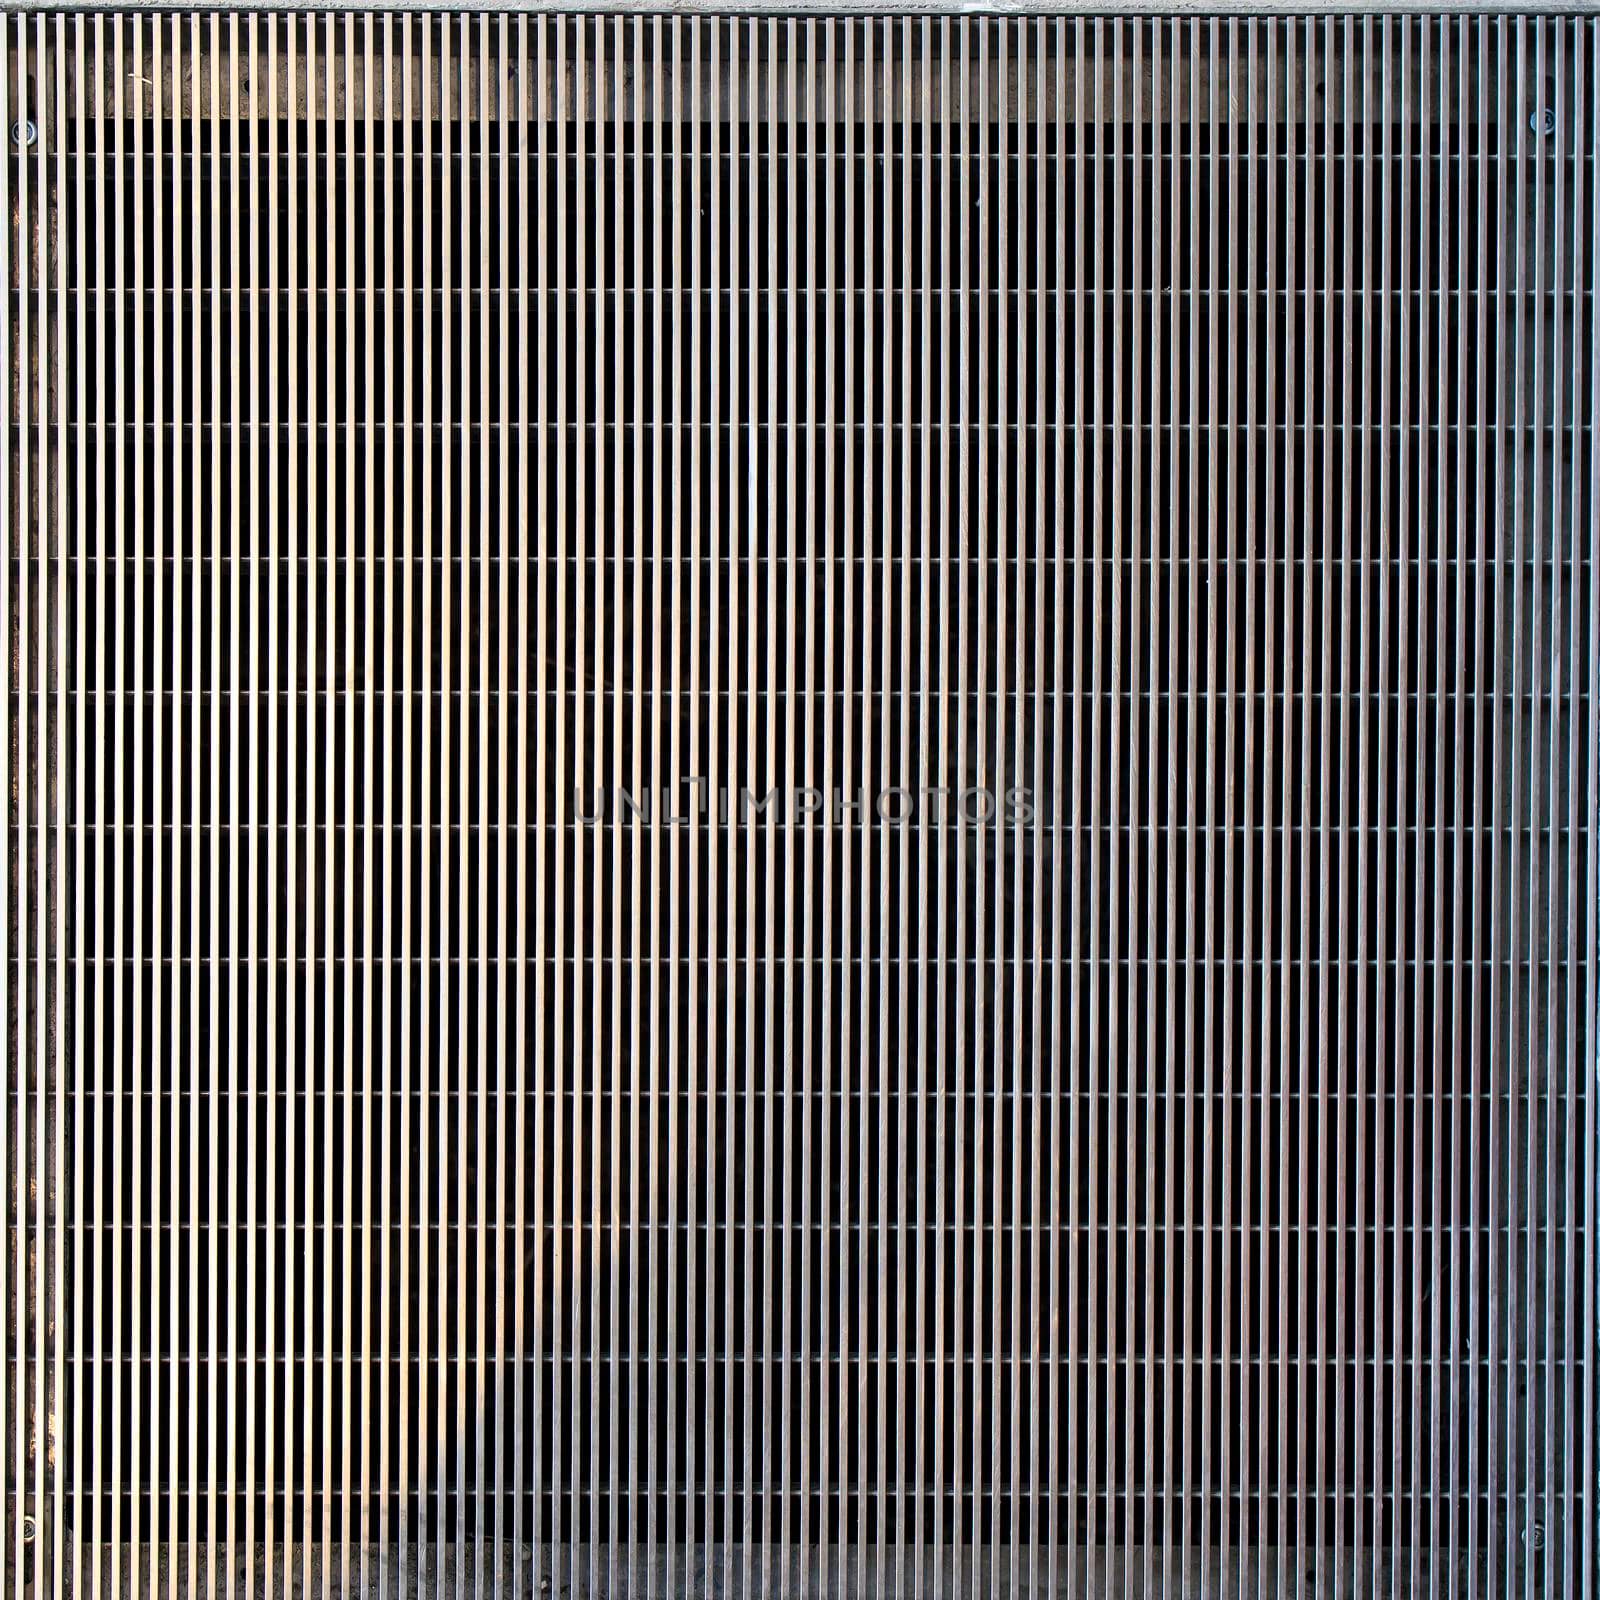 Fragment of a modern ventilation grill in a concrete floor by elenarostunova